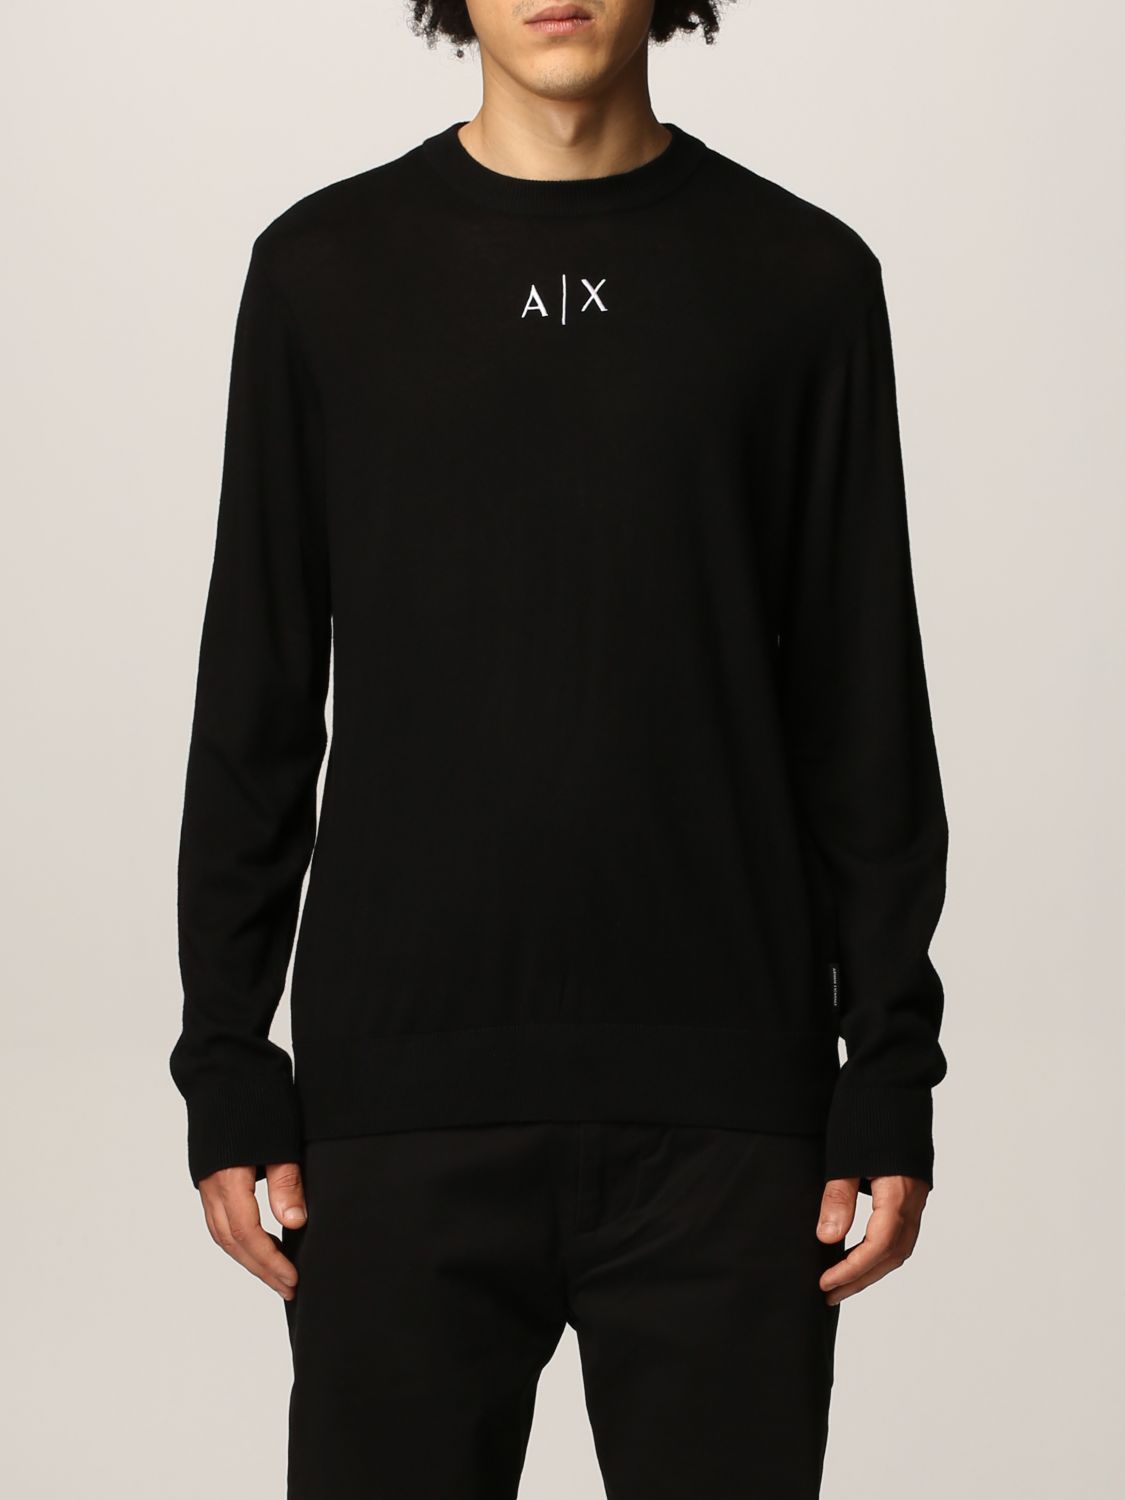 ARMANI EXCHANGE: cotton blend jumper with logo - Black | Armani ...